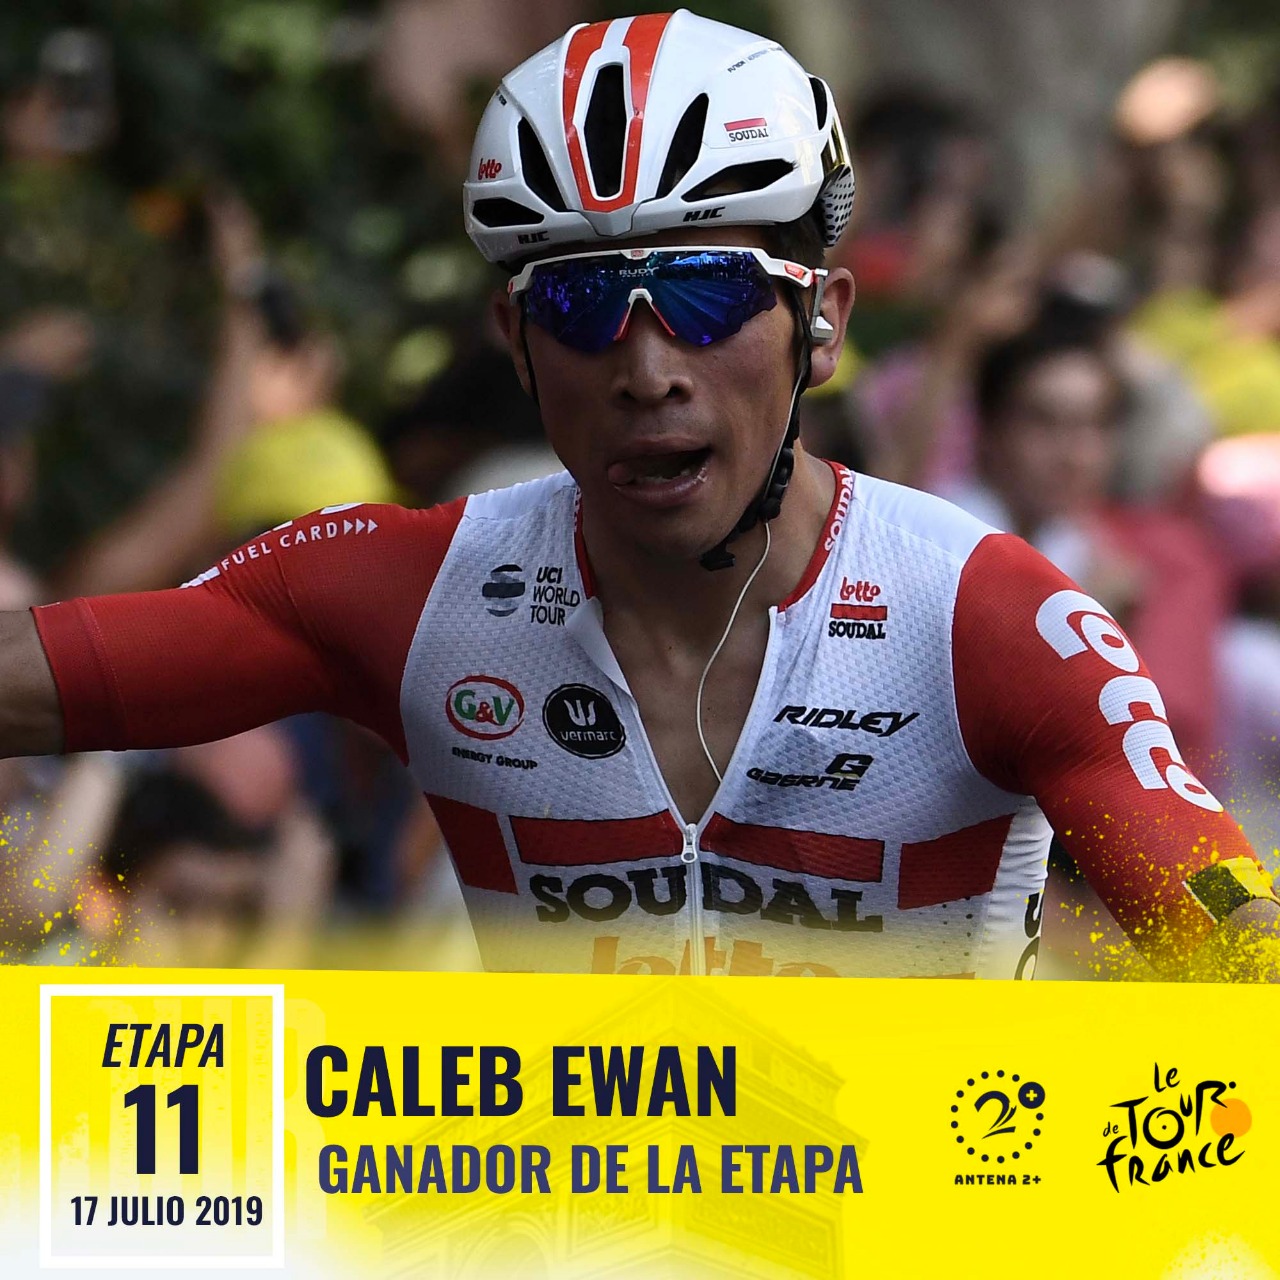 Caleb Ewan (Lotto Soudal) ganó la etapa 11 del Tour de Francia